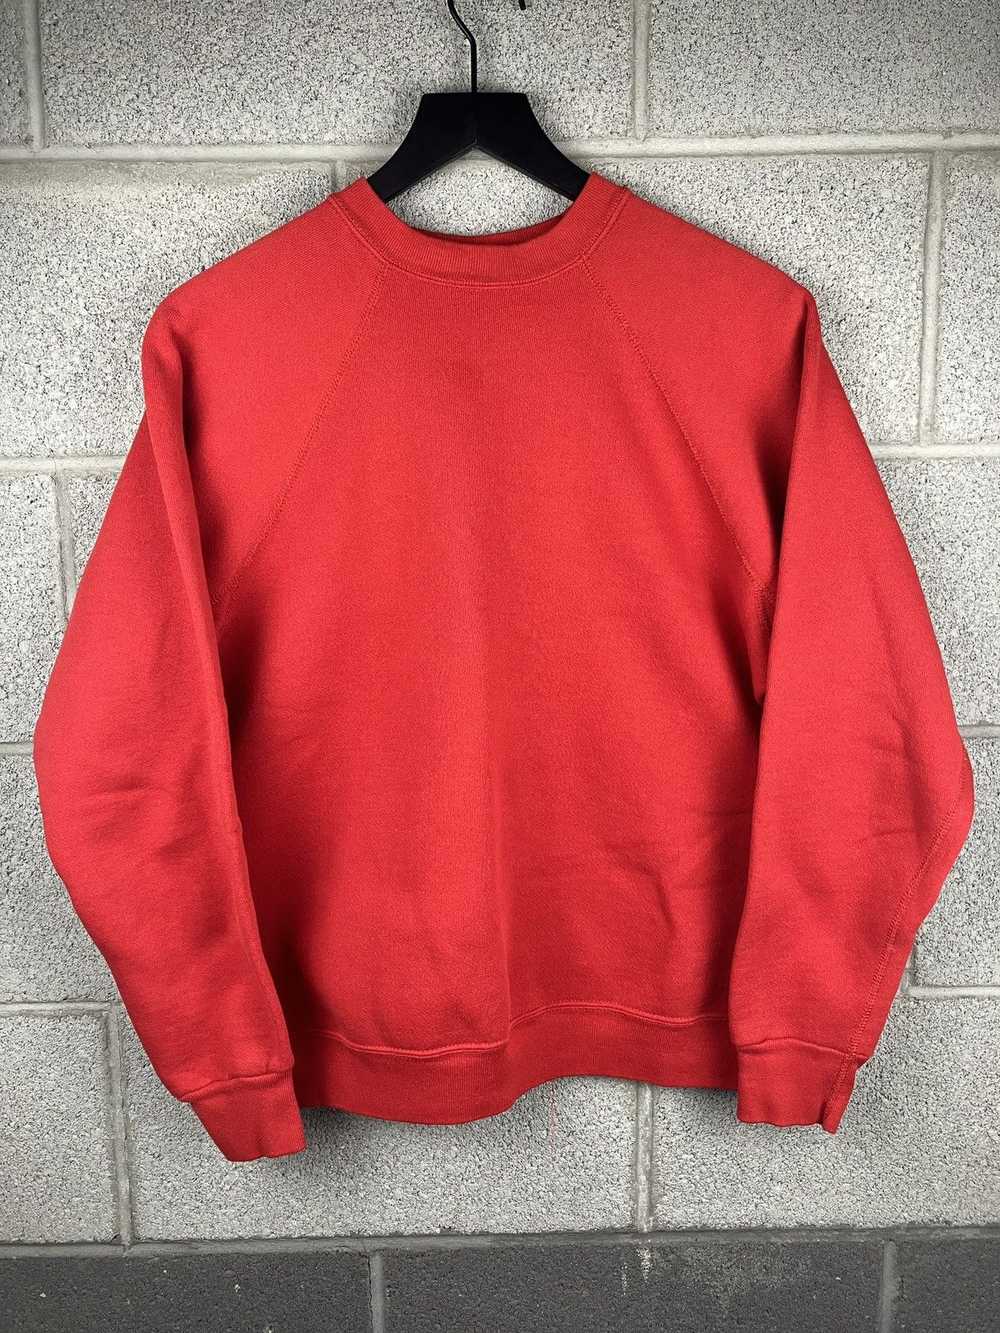 Vintage Vintage 1990s Athletic Crewneck Sweatshirt - image 1